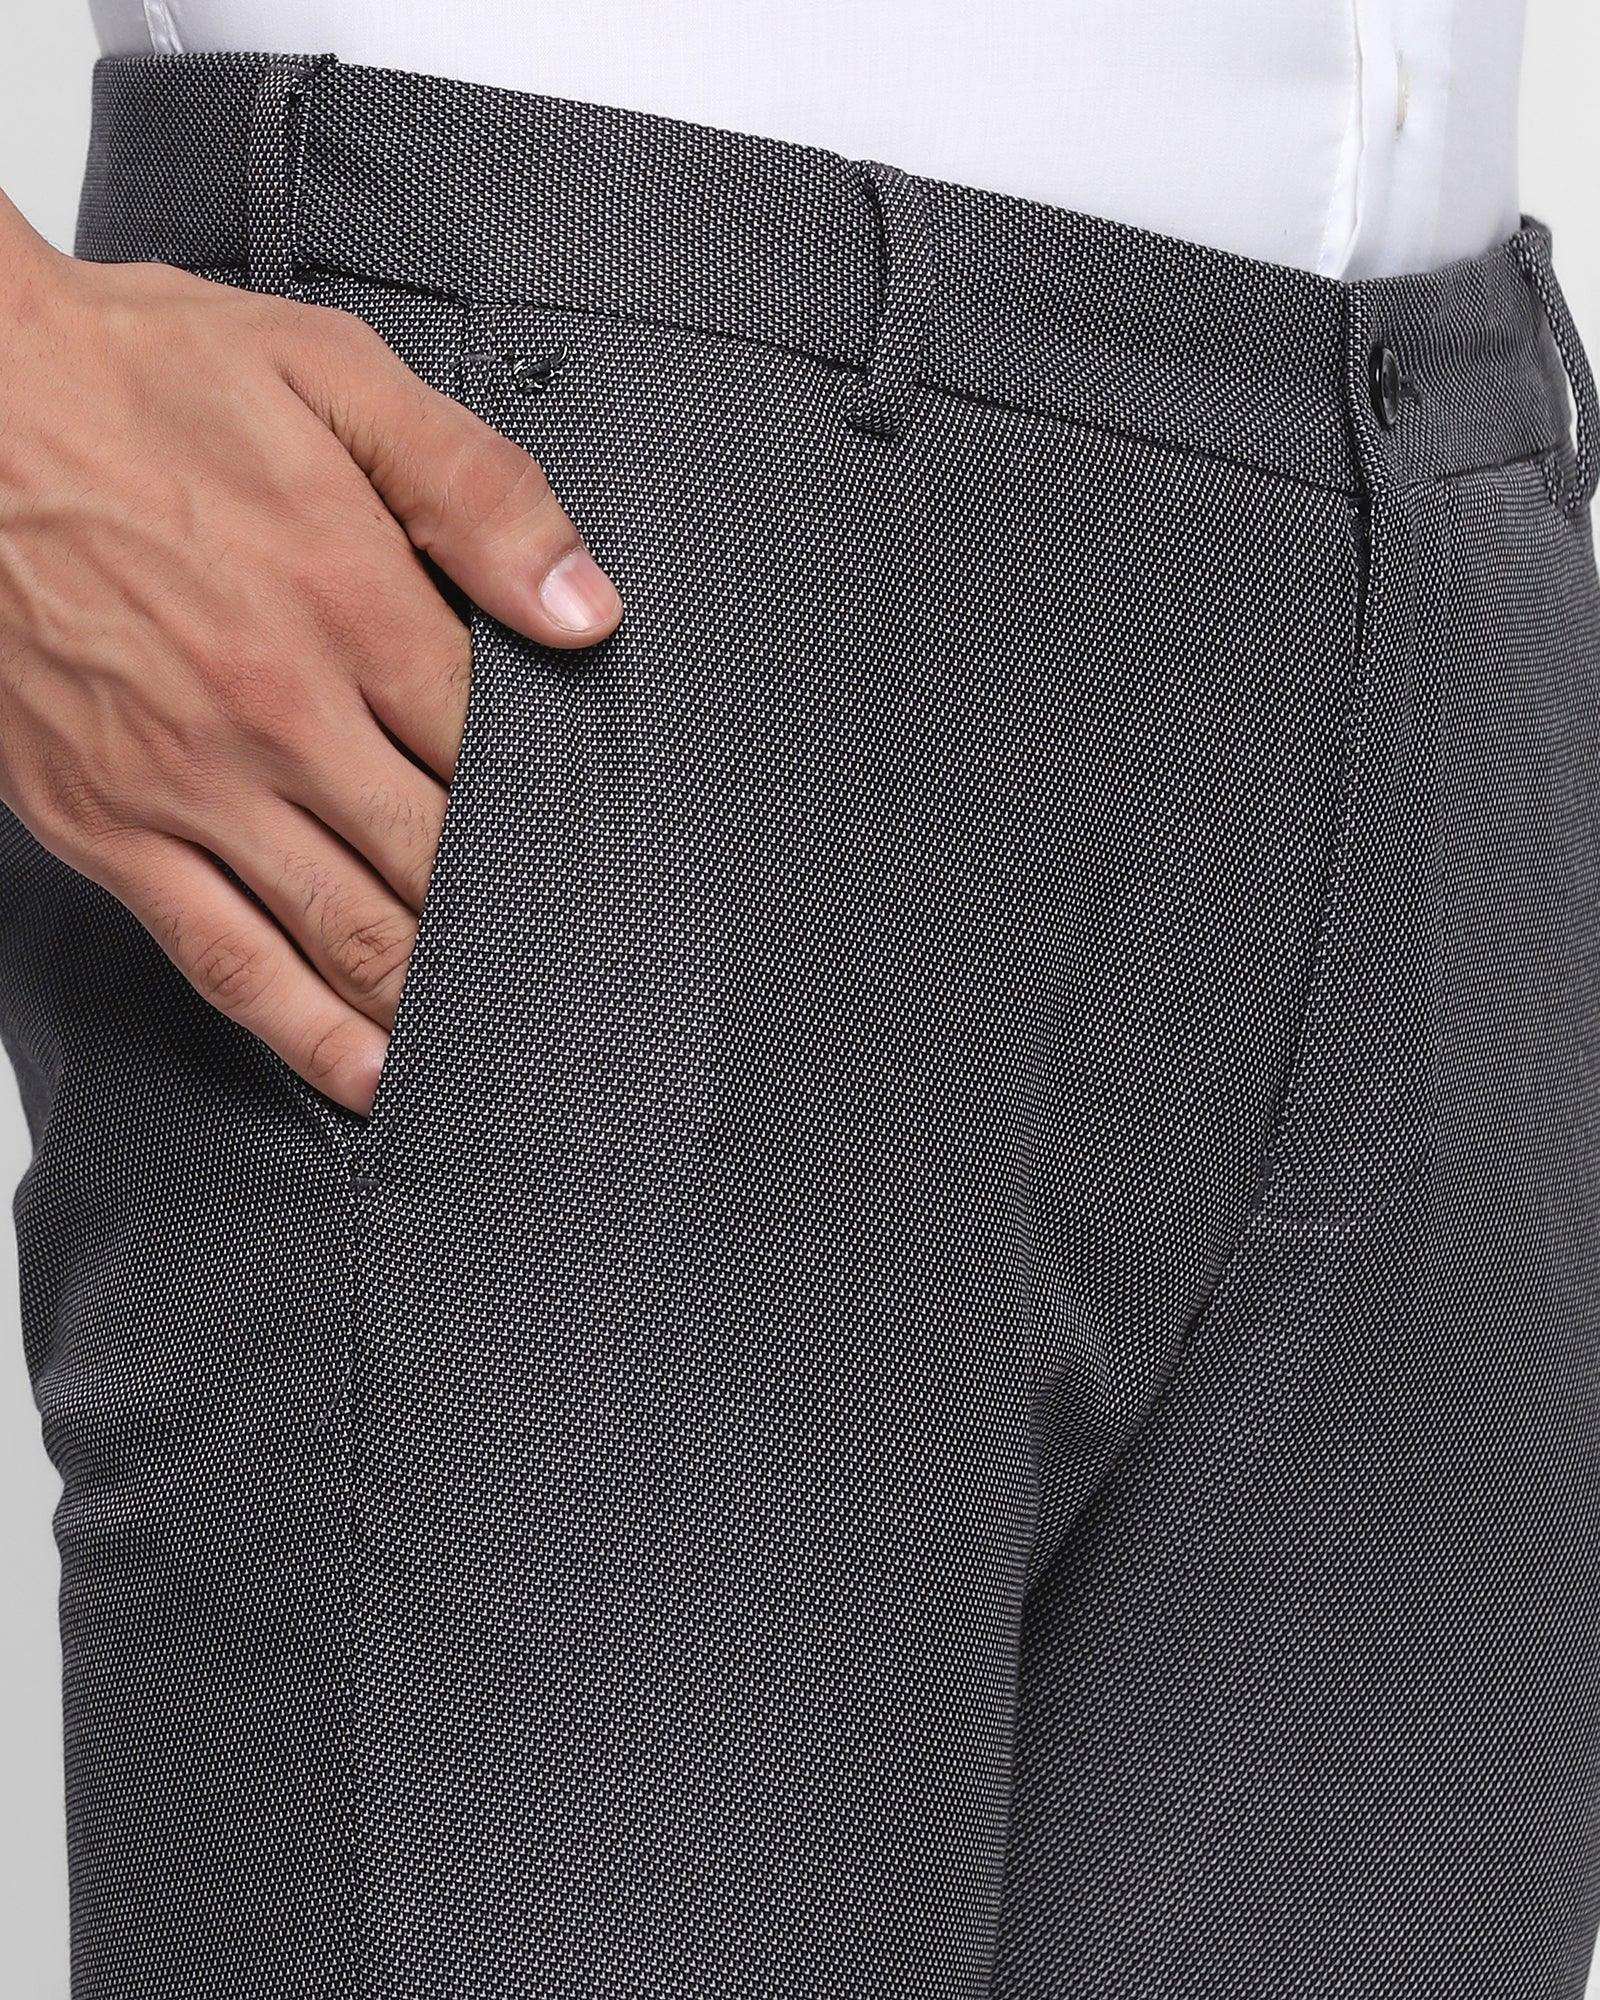 Slim Comfort B-95 Formal Charcoal Textured Trouser - Cairo